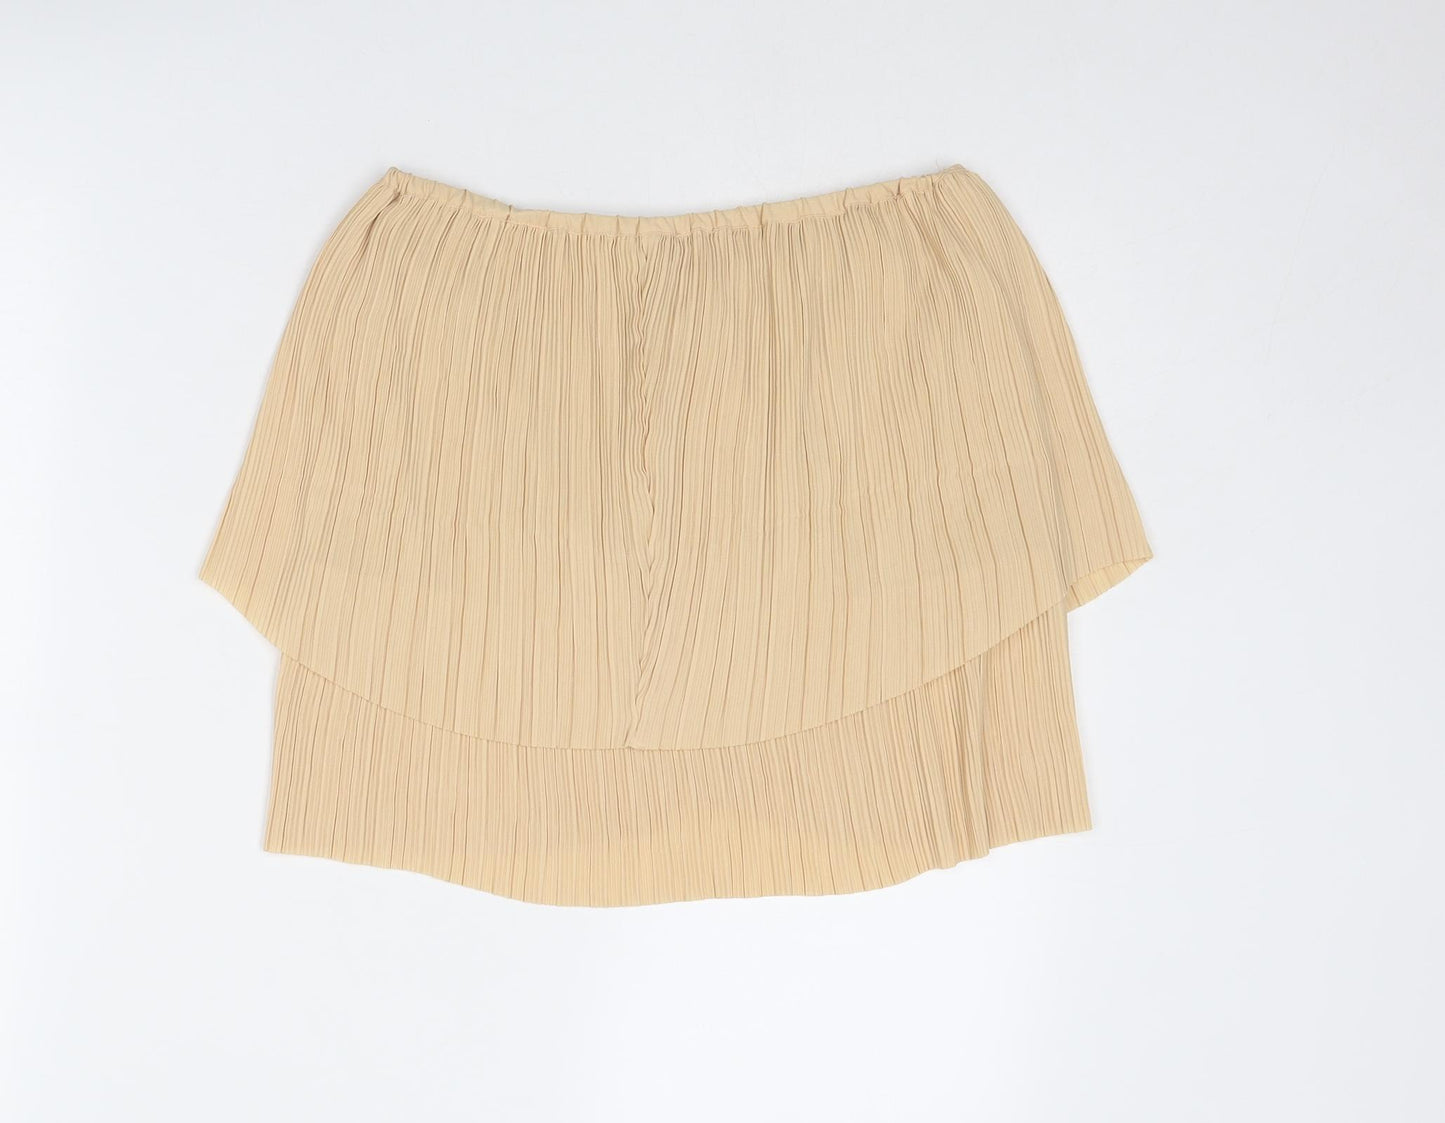 Buuns Bazaar Womens Beige Polyester Pleated Skirt Size 8